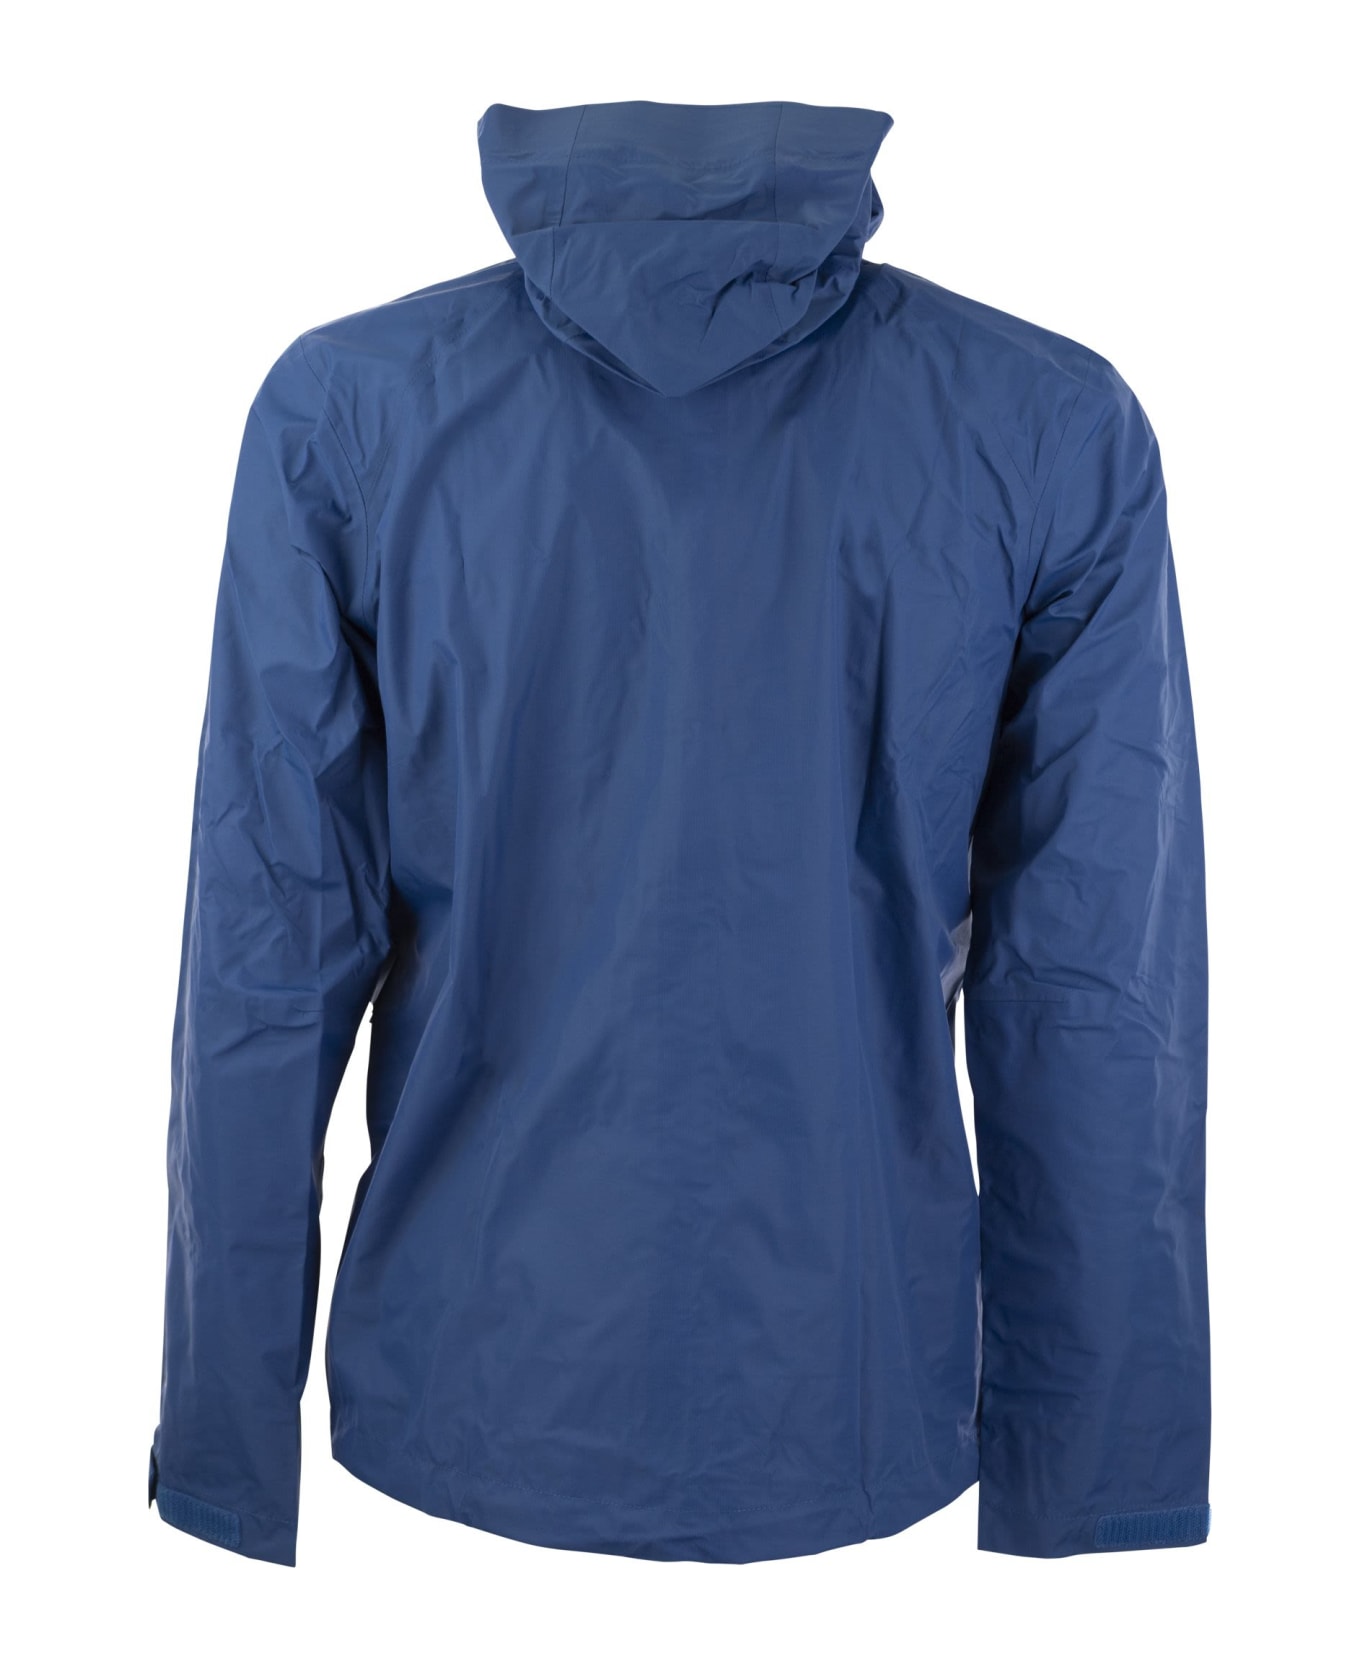 Patagonia Nylon Rainproof Jacket - Enlb